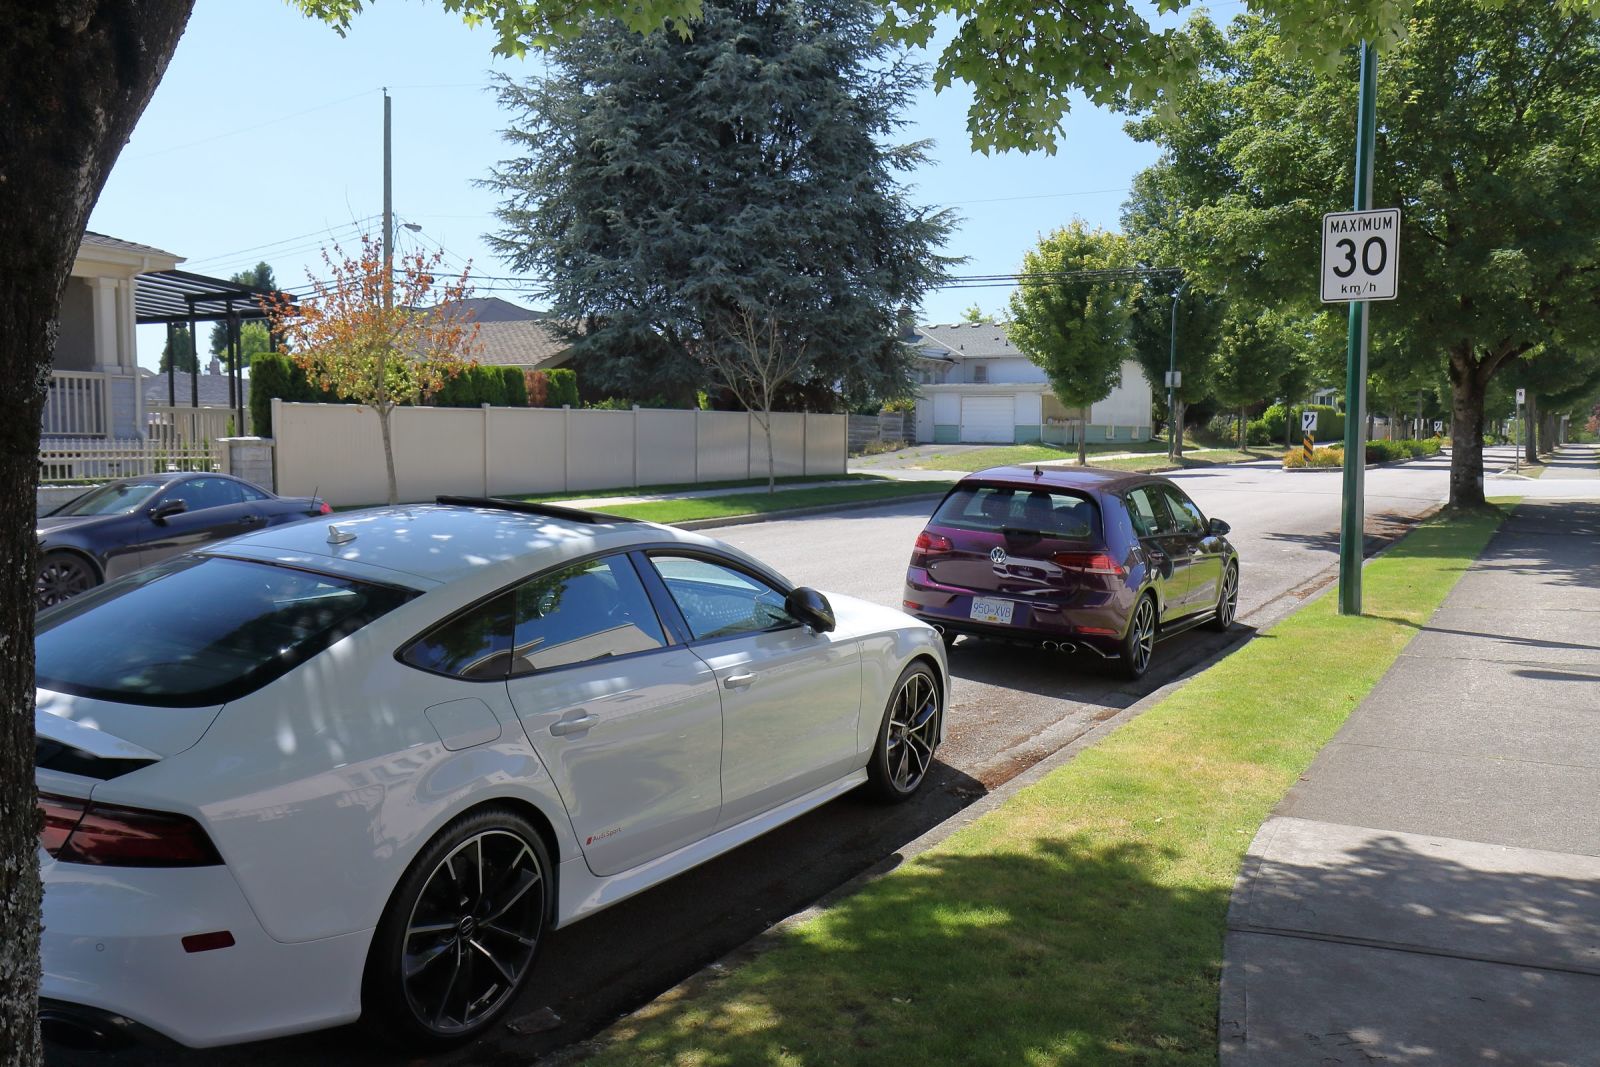 Audi 4G8 RS 7 x VW Mk7 Golf R... I guess the family really prefers VAG